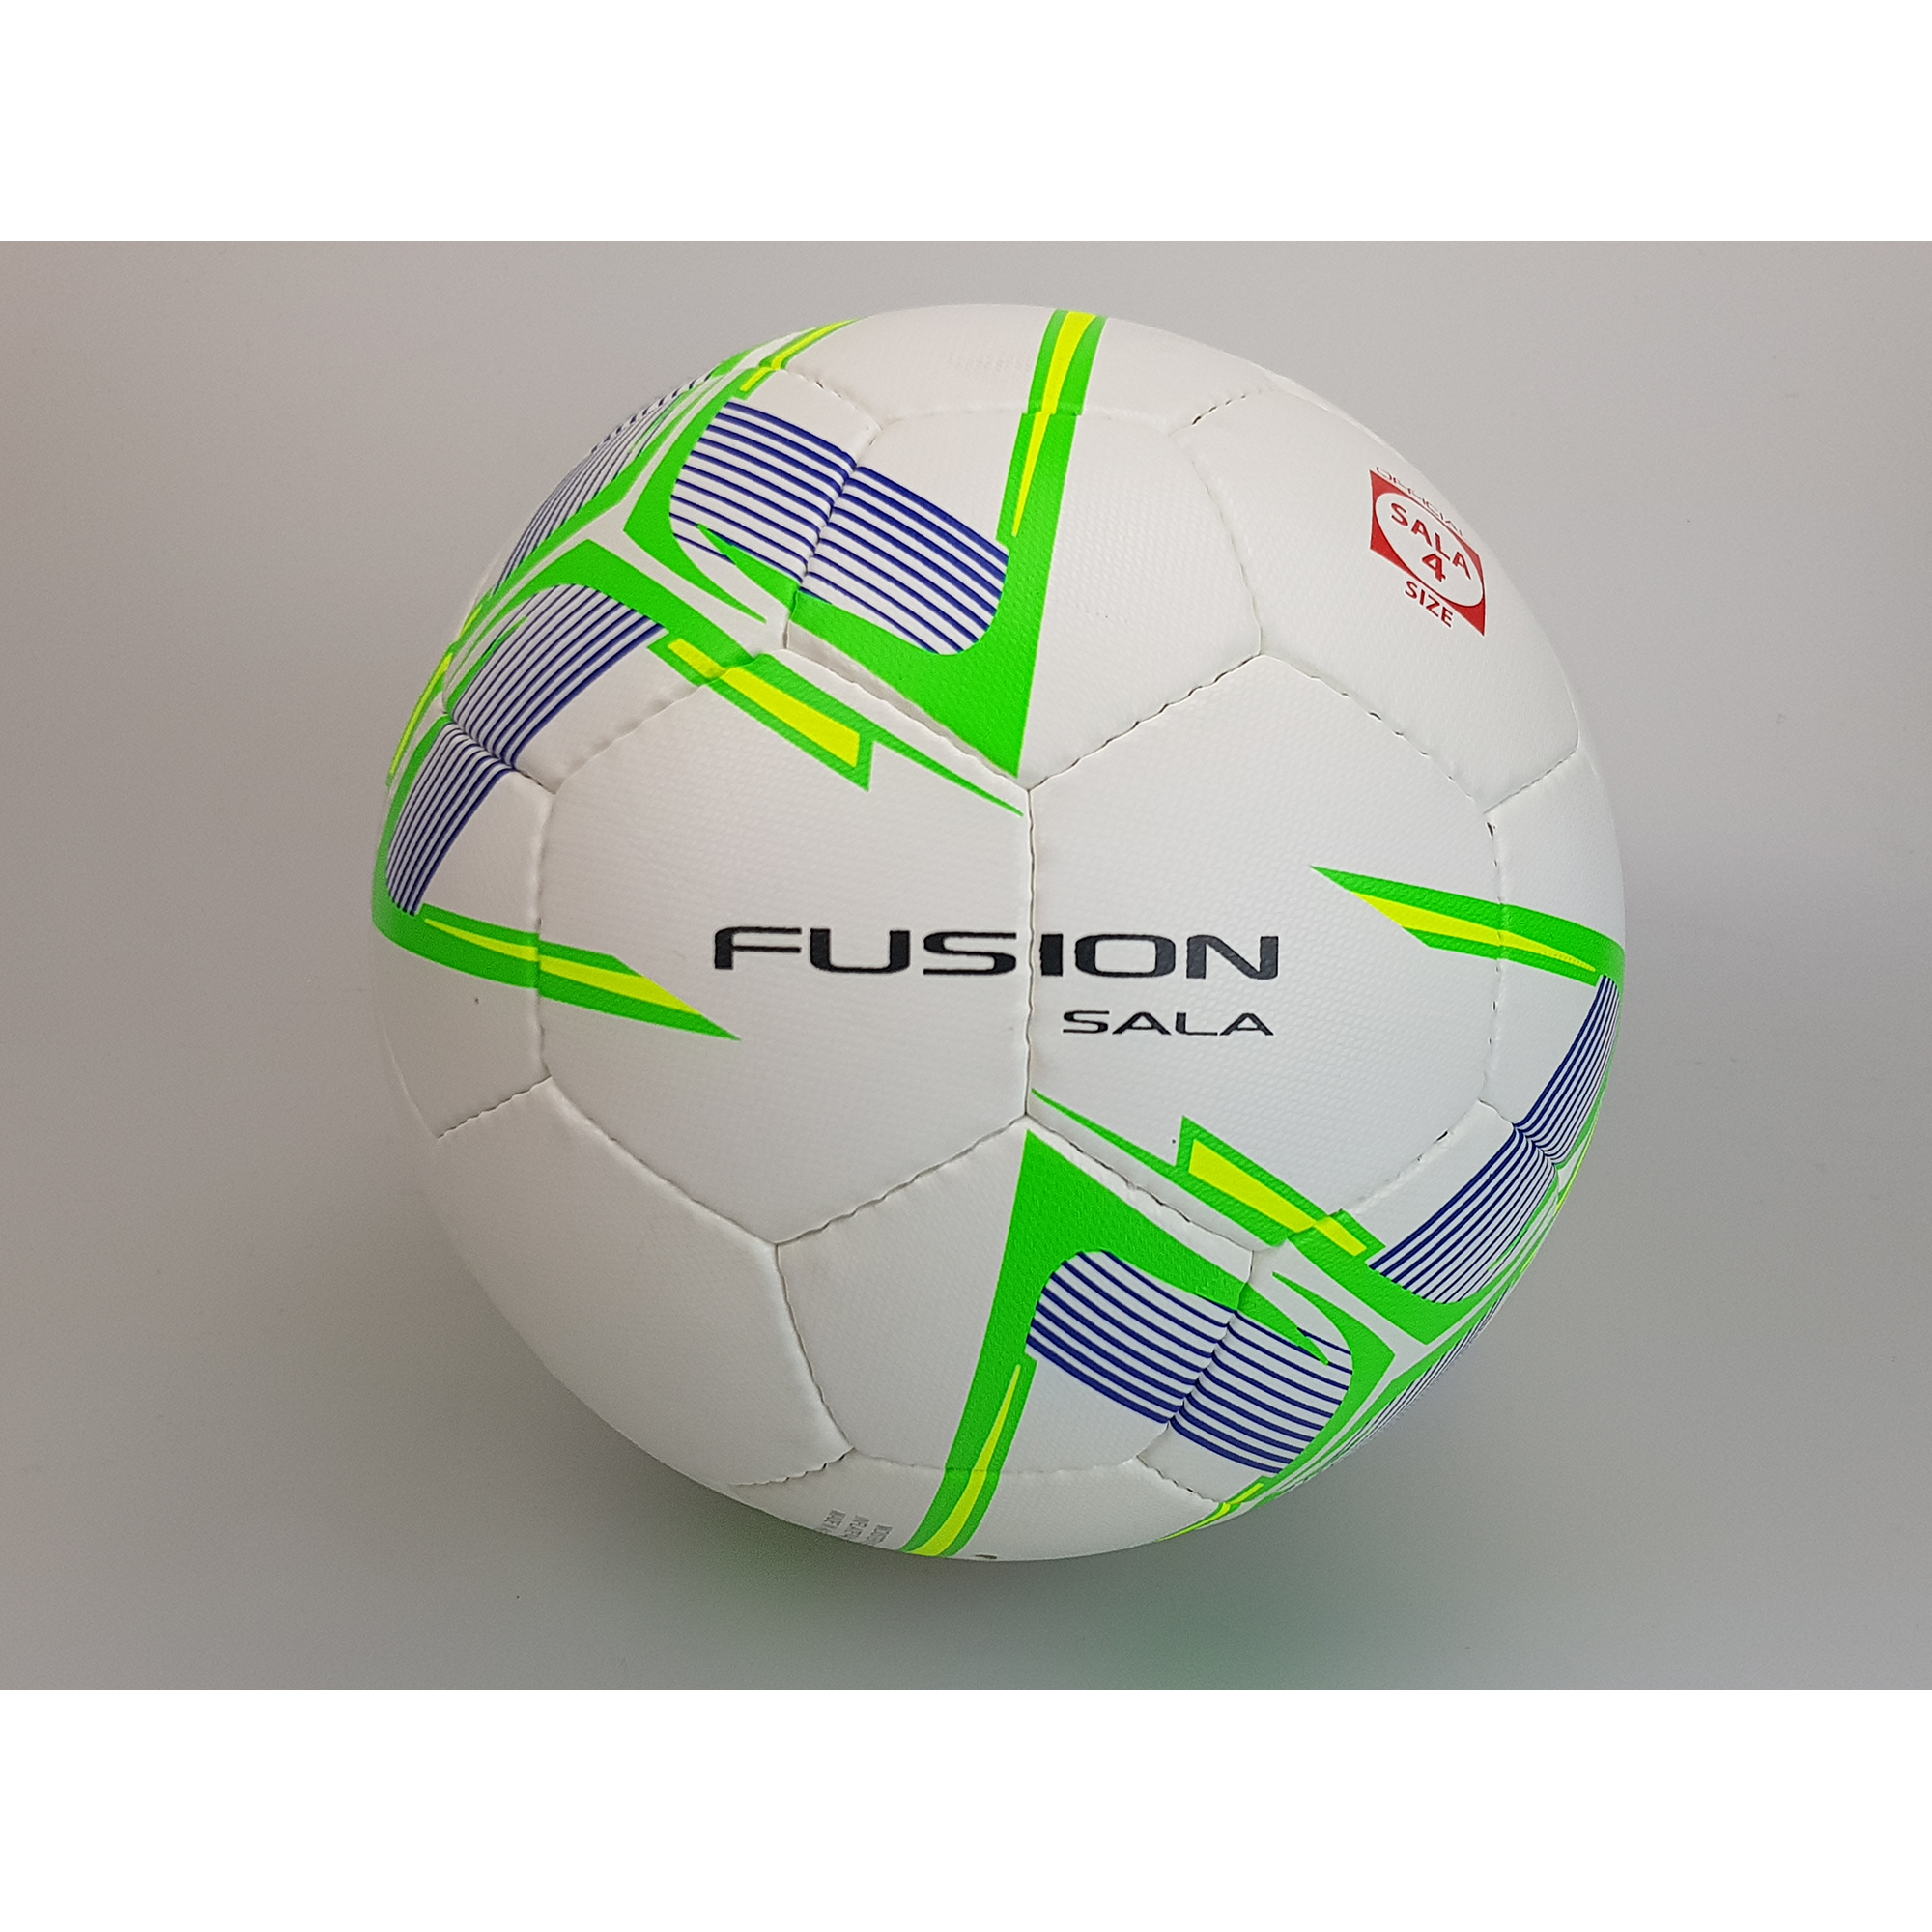 Precision Fusion Salafutsal Footballsz3